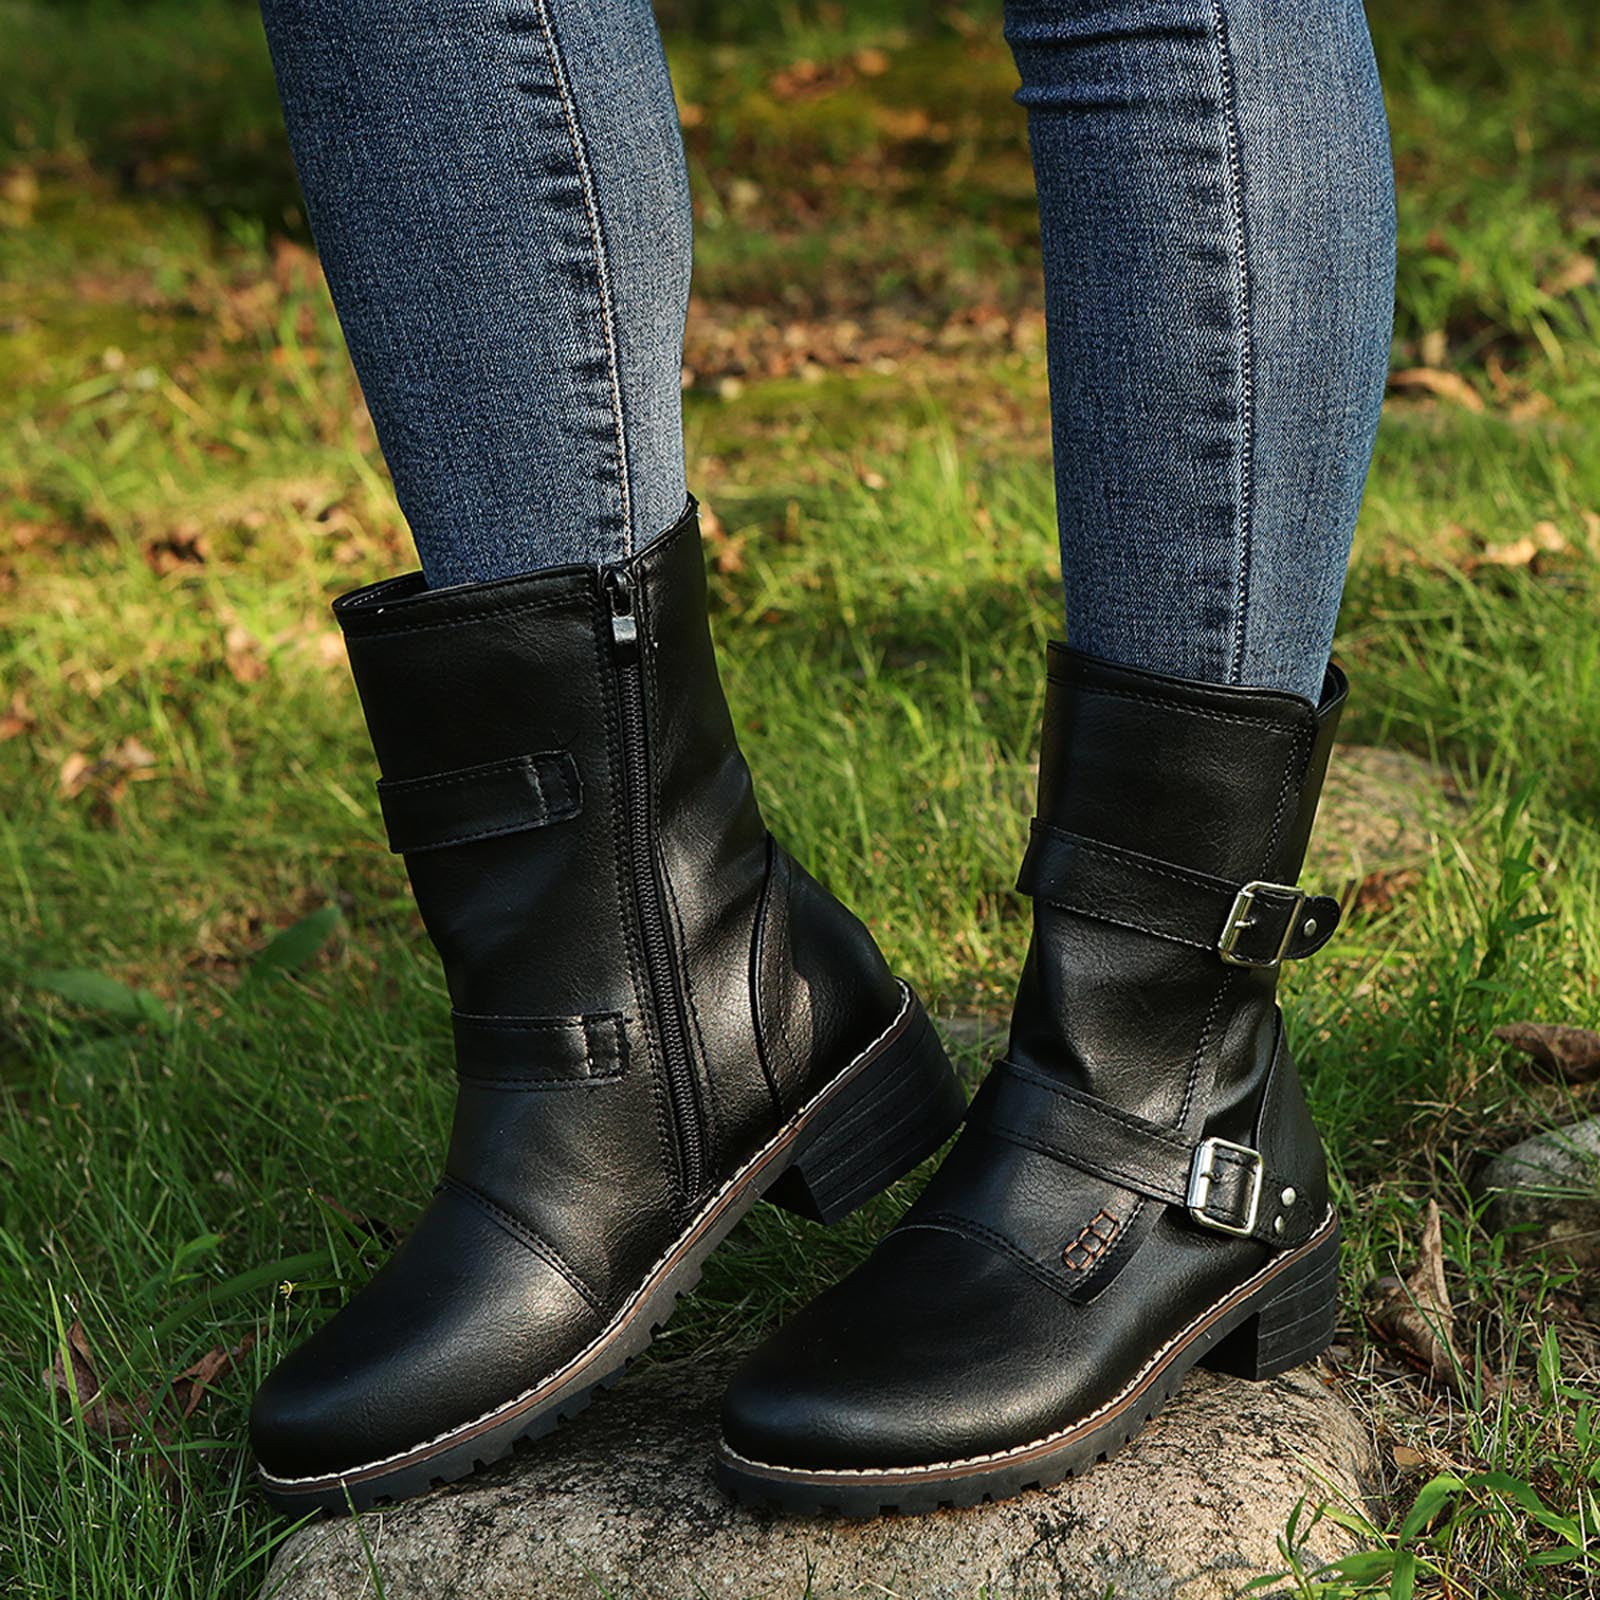 Women's Boots: Booties & Heeled Boots